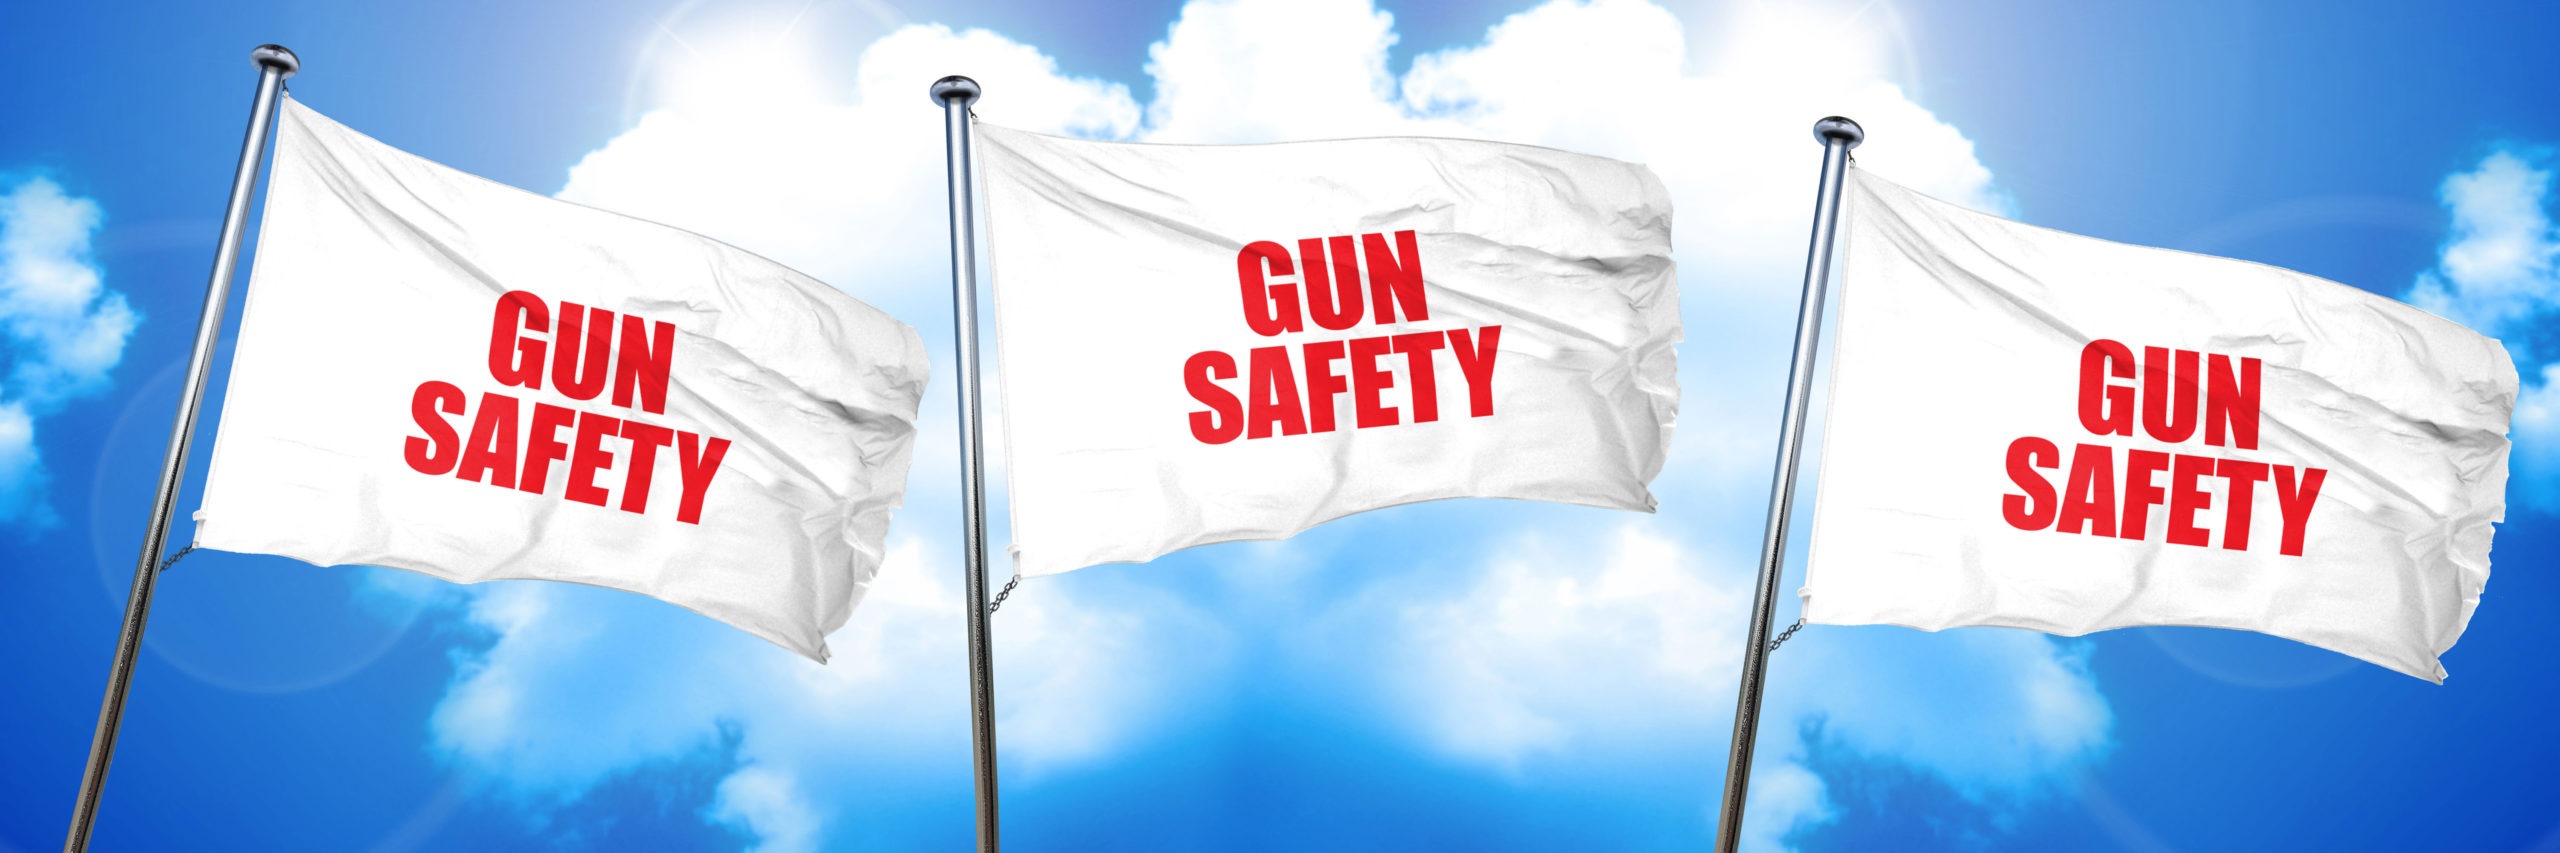 gun safety, 3D rendering, triple flags